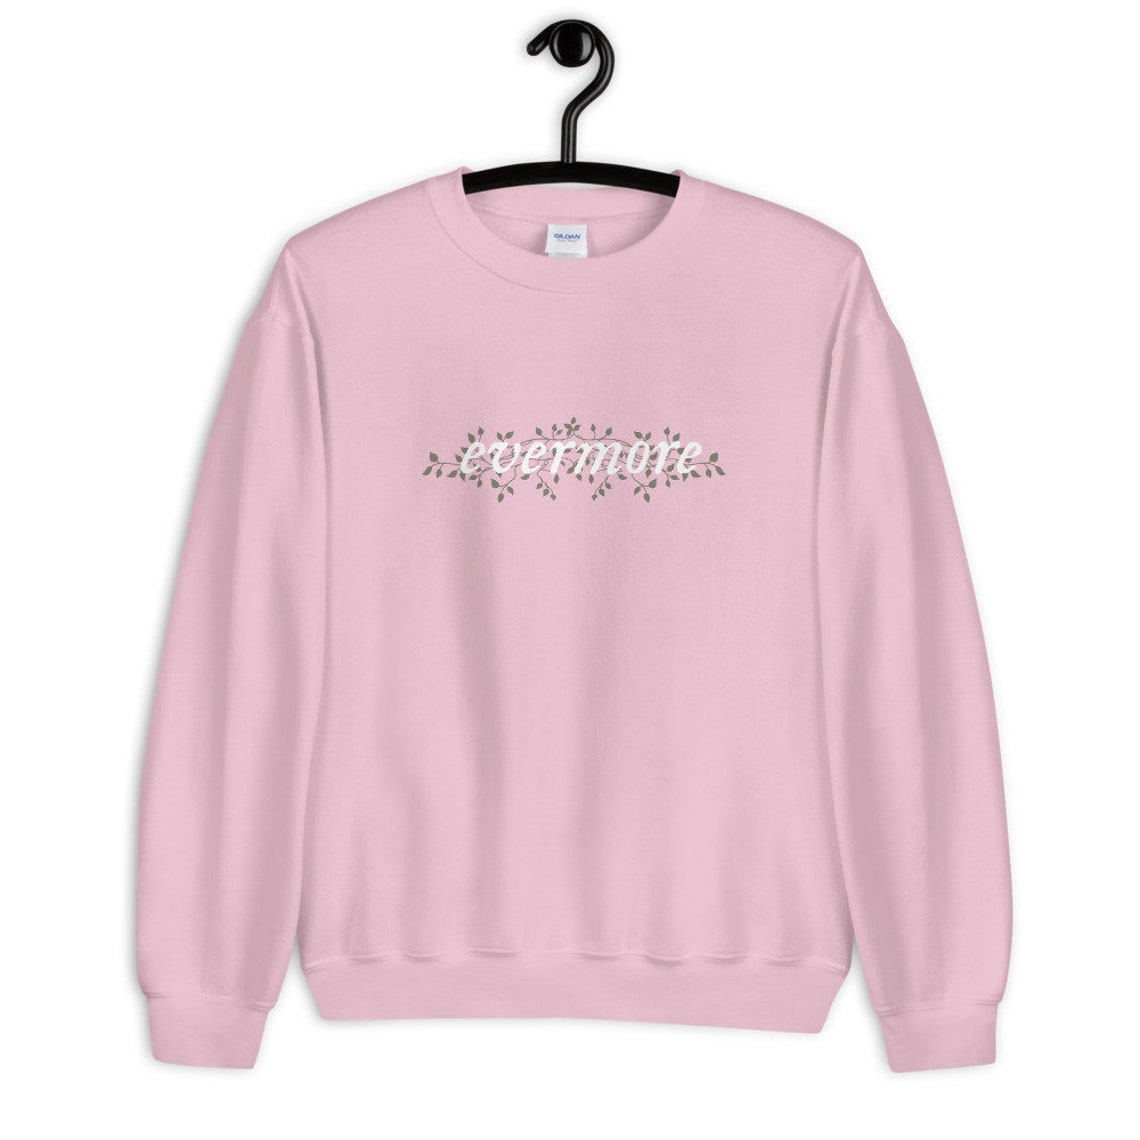 Evermore Sweater Taylor Swift Inspired Ivy Crewneck Sweatshirt | Etsy